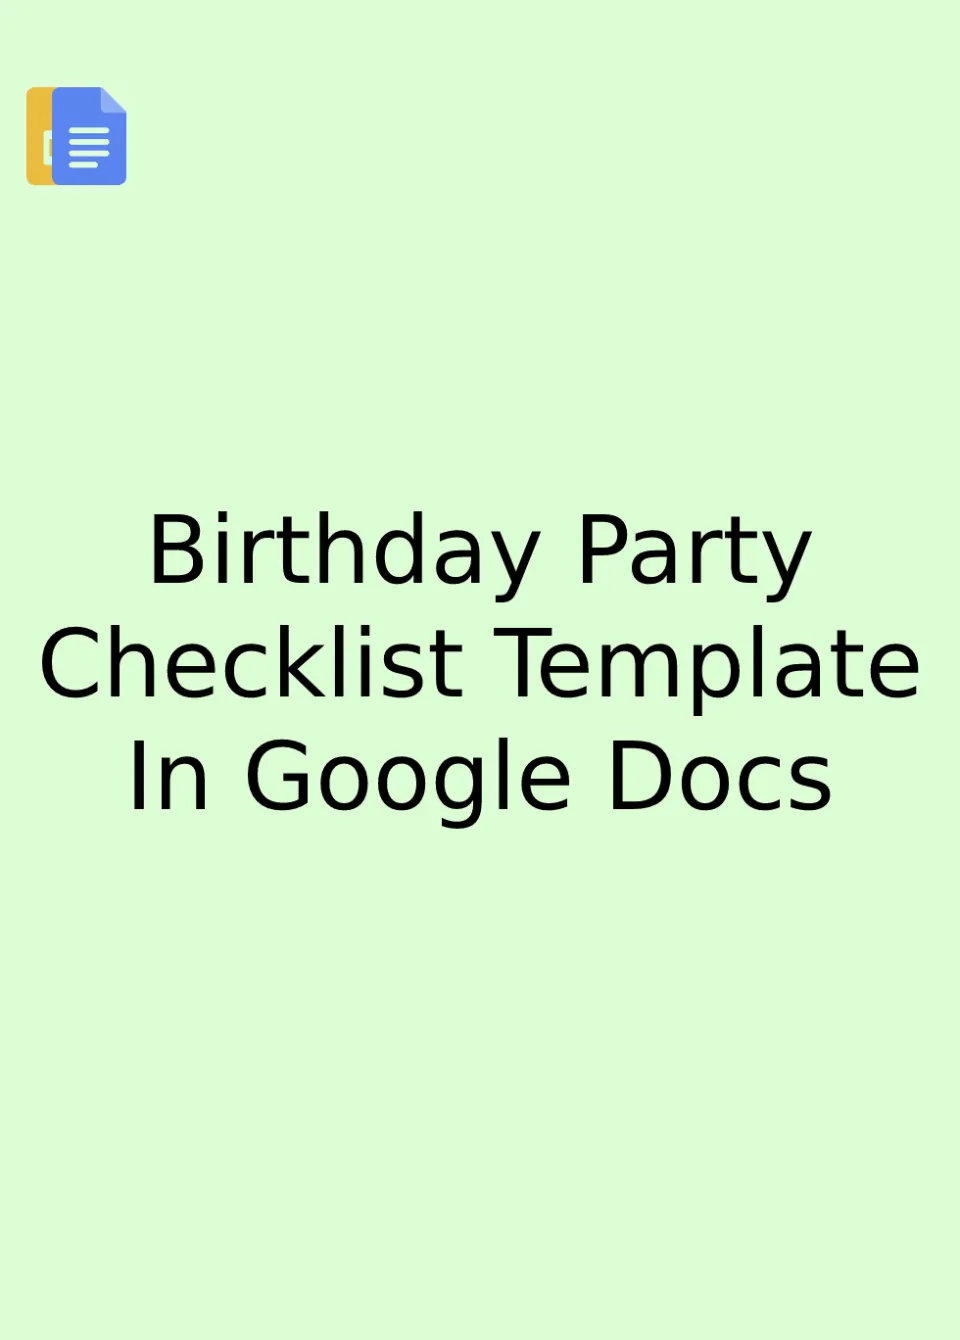 Birthday Party Checklist Template Google Docs